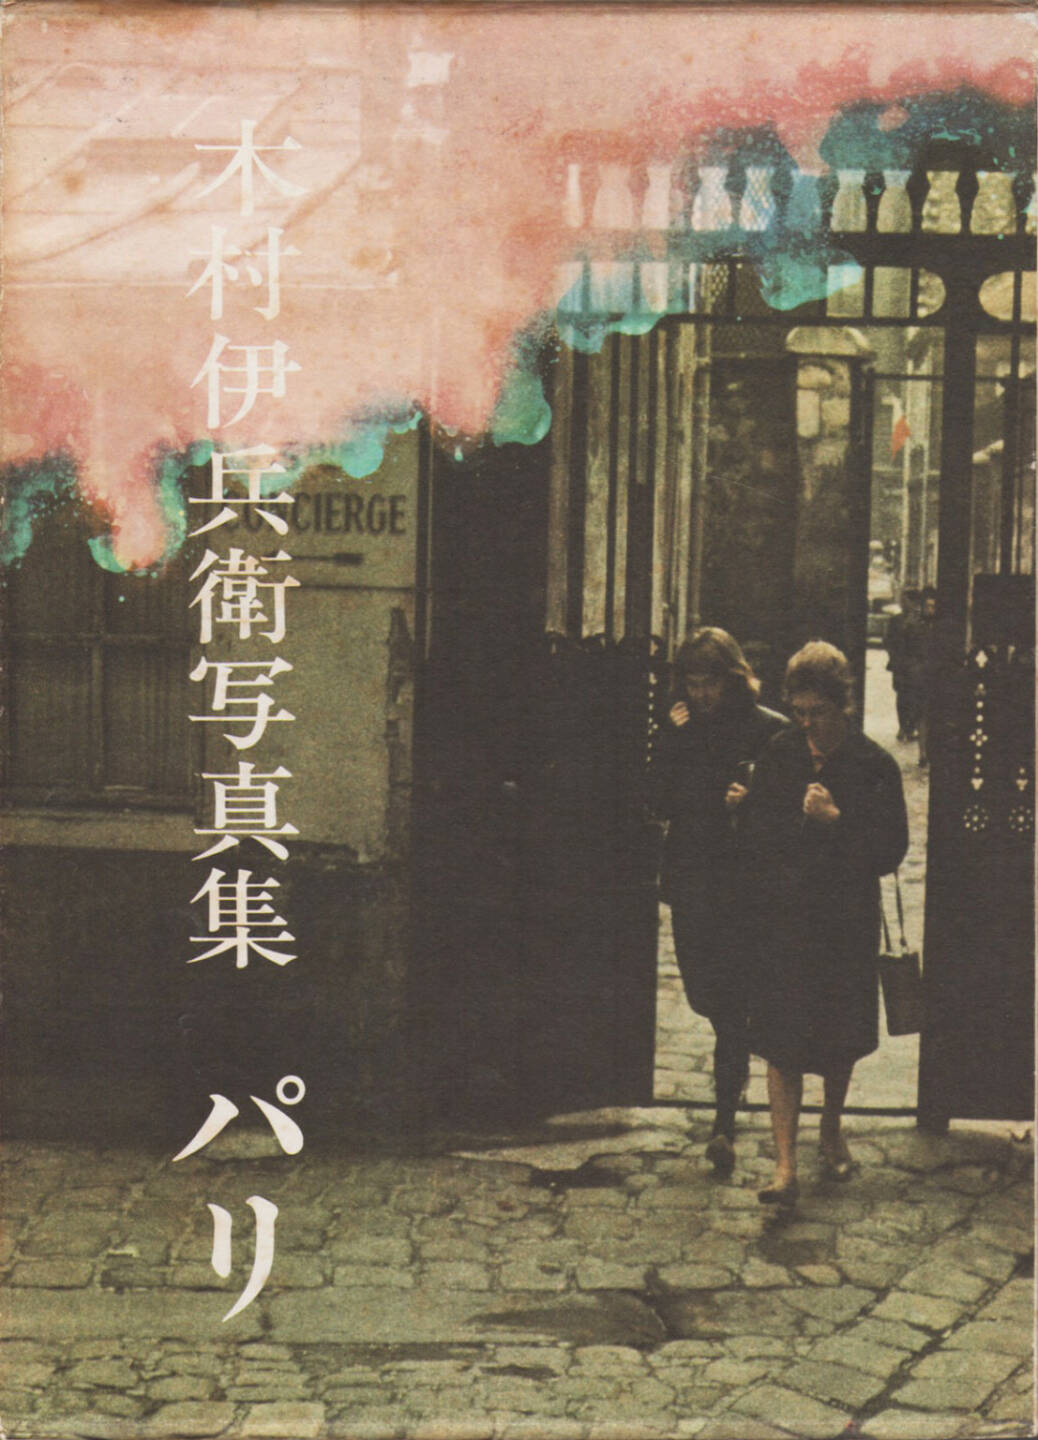 Ihei Kimura - Paris (木村伊兵衛 パリ), Nora-sha 1974, Cover - http://josefchladek.com/book/ihei_kimura_-_paris_木村伊兵衛_パリ